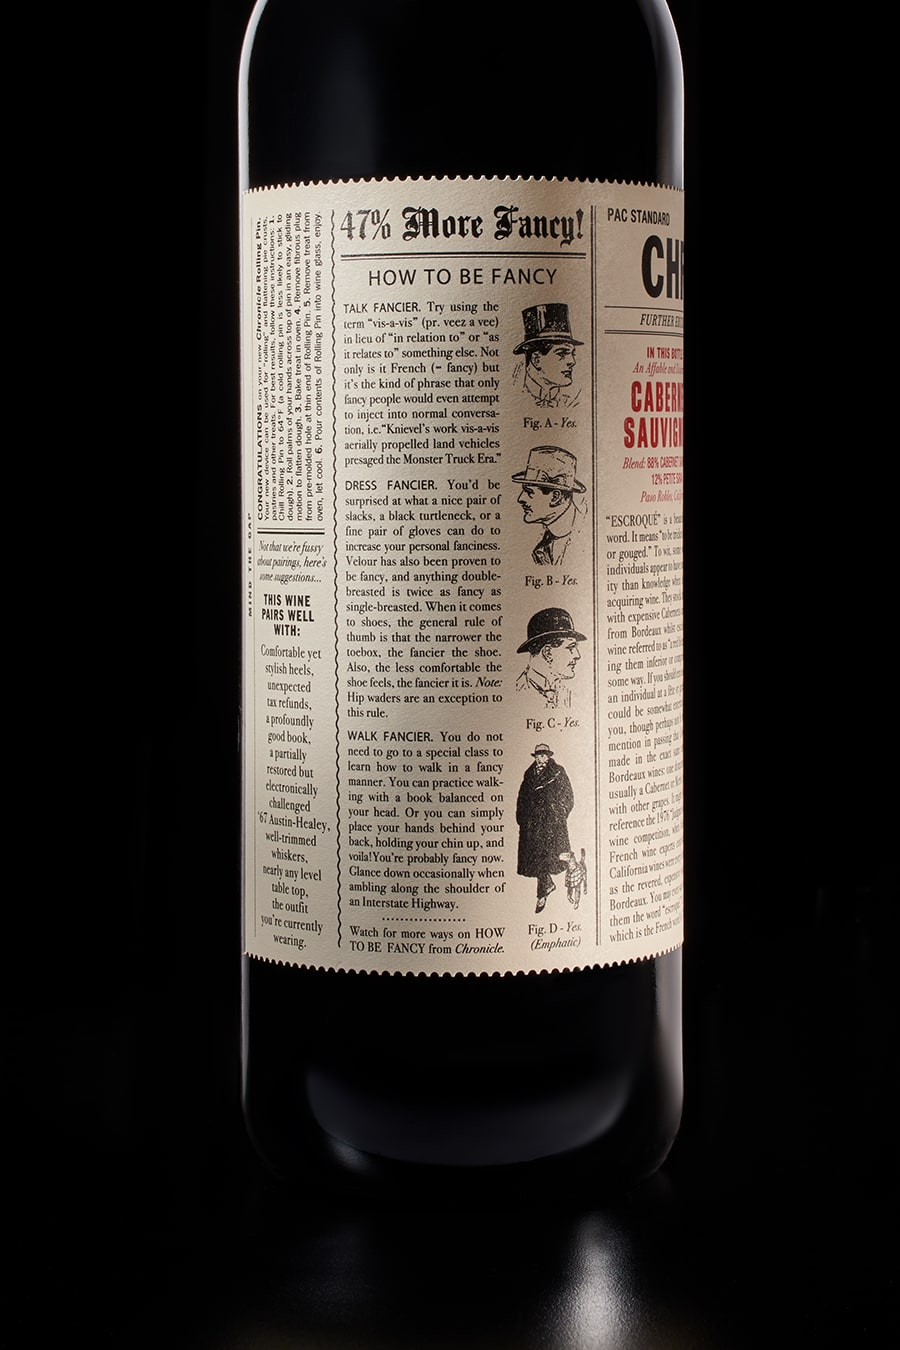 Chronicle Wine bottle label side panel detail